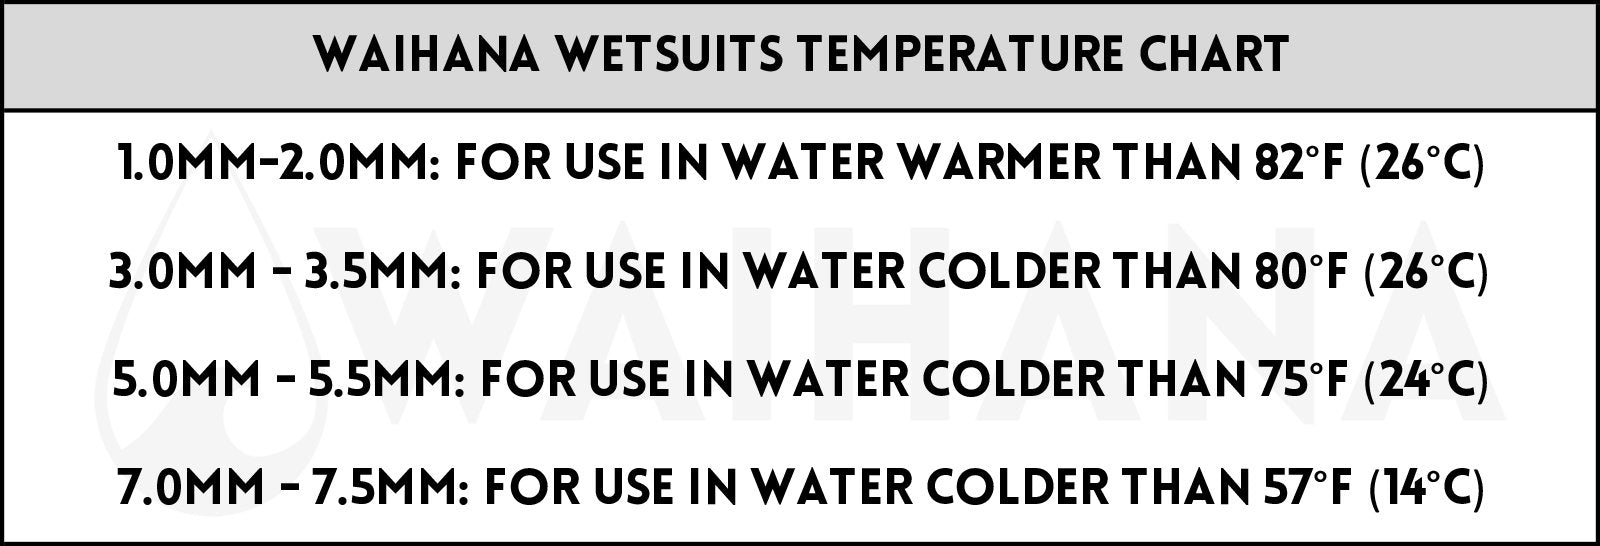 Waihana Wetsuit Temperature Chart